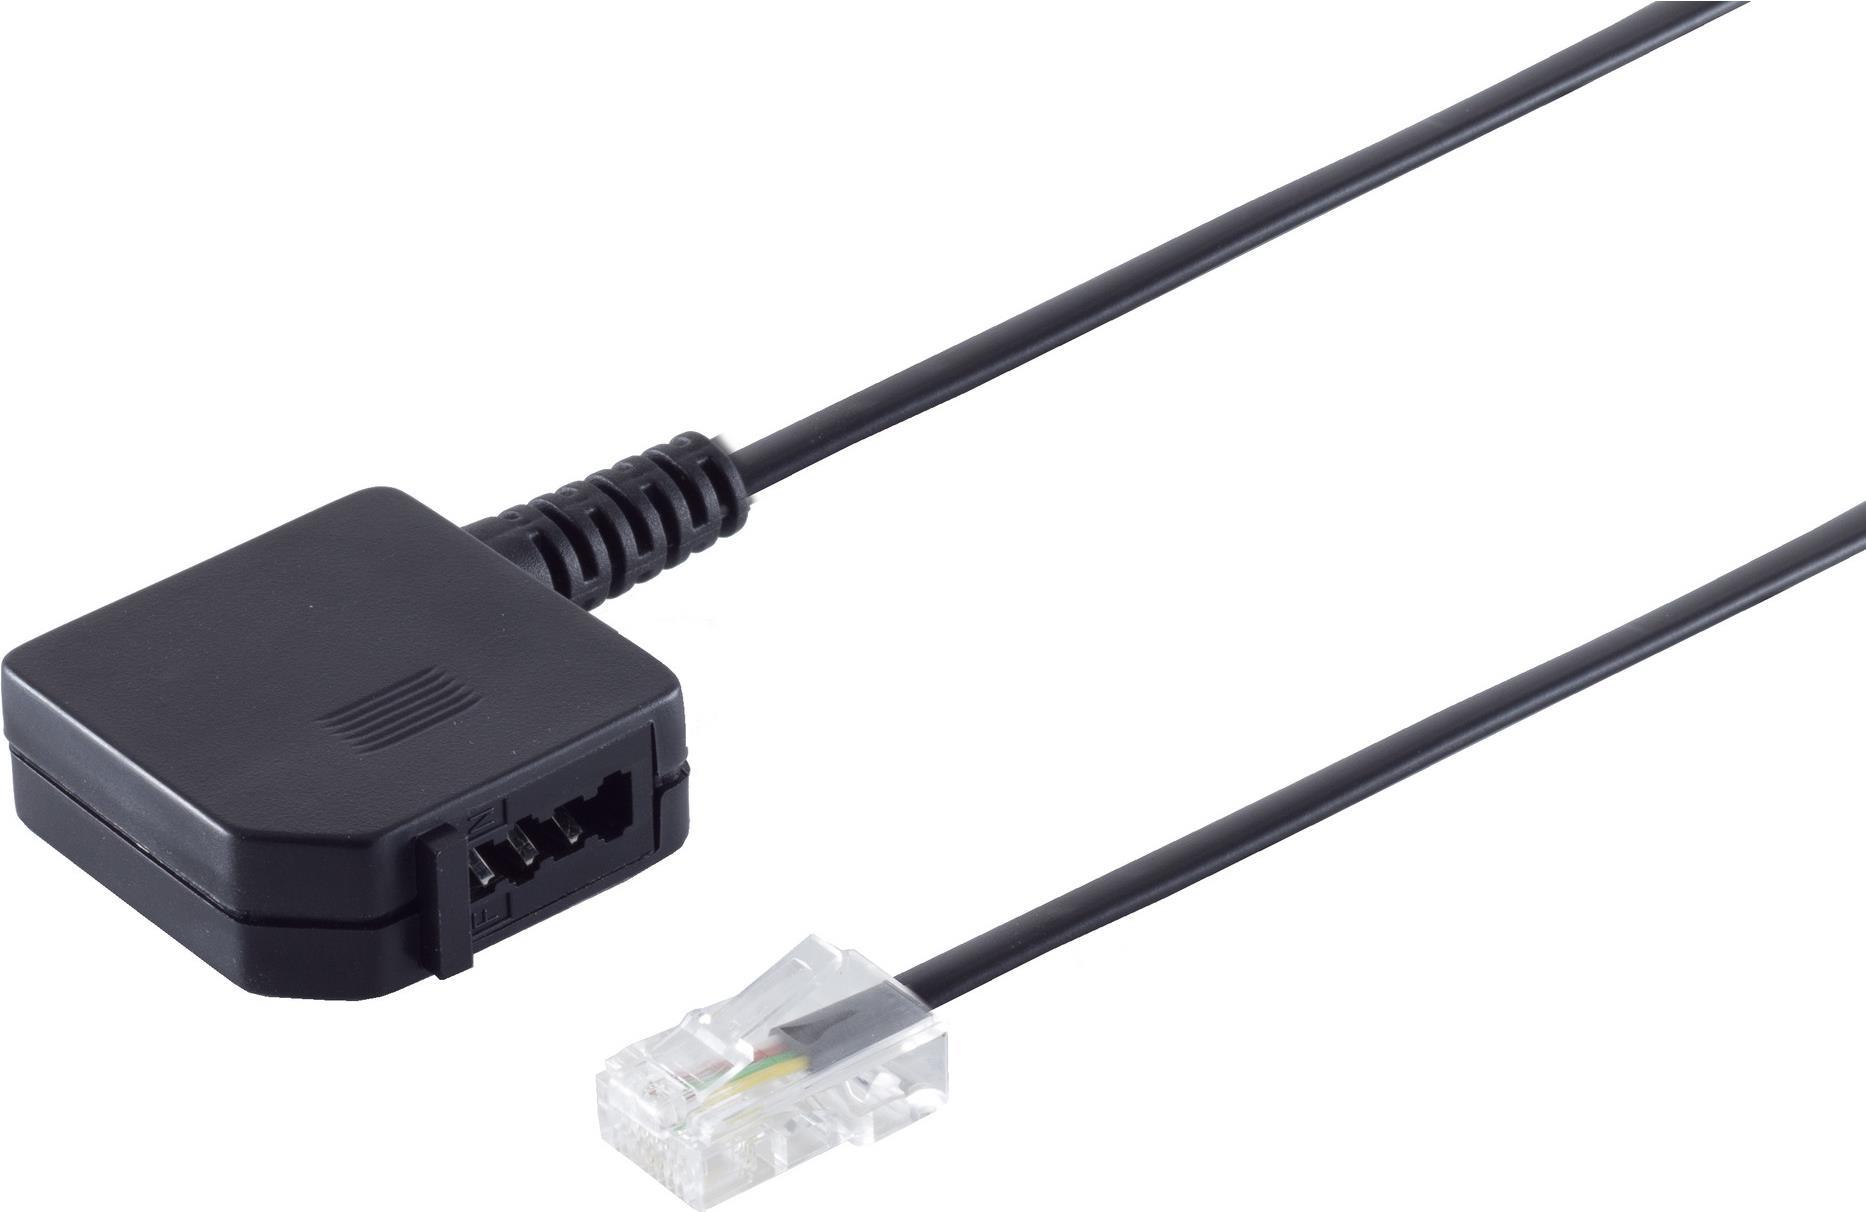 S-CONN S/CONN maximum connectivity Telefon Adapter-Western-Stecker 8/4 auf TAE U-Kupplung, 0,2m (710